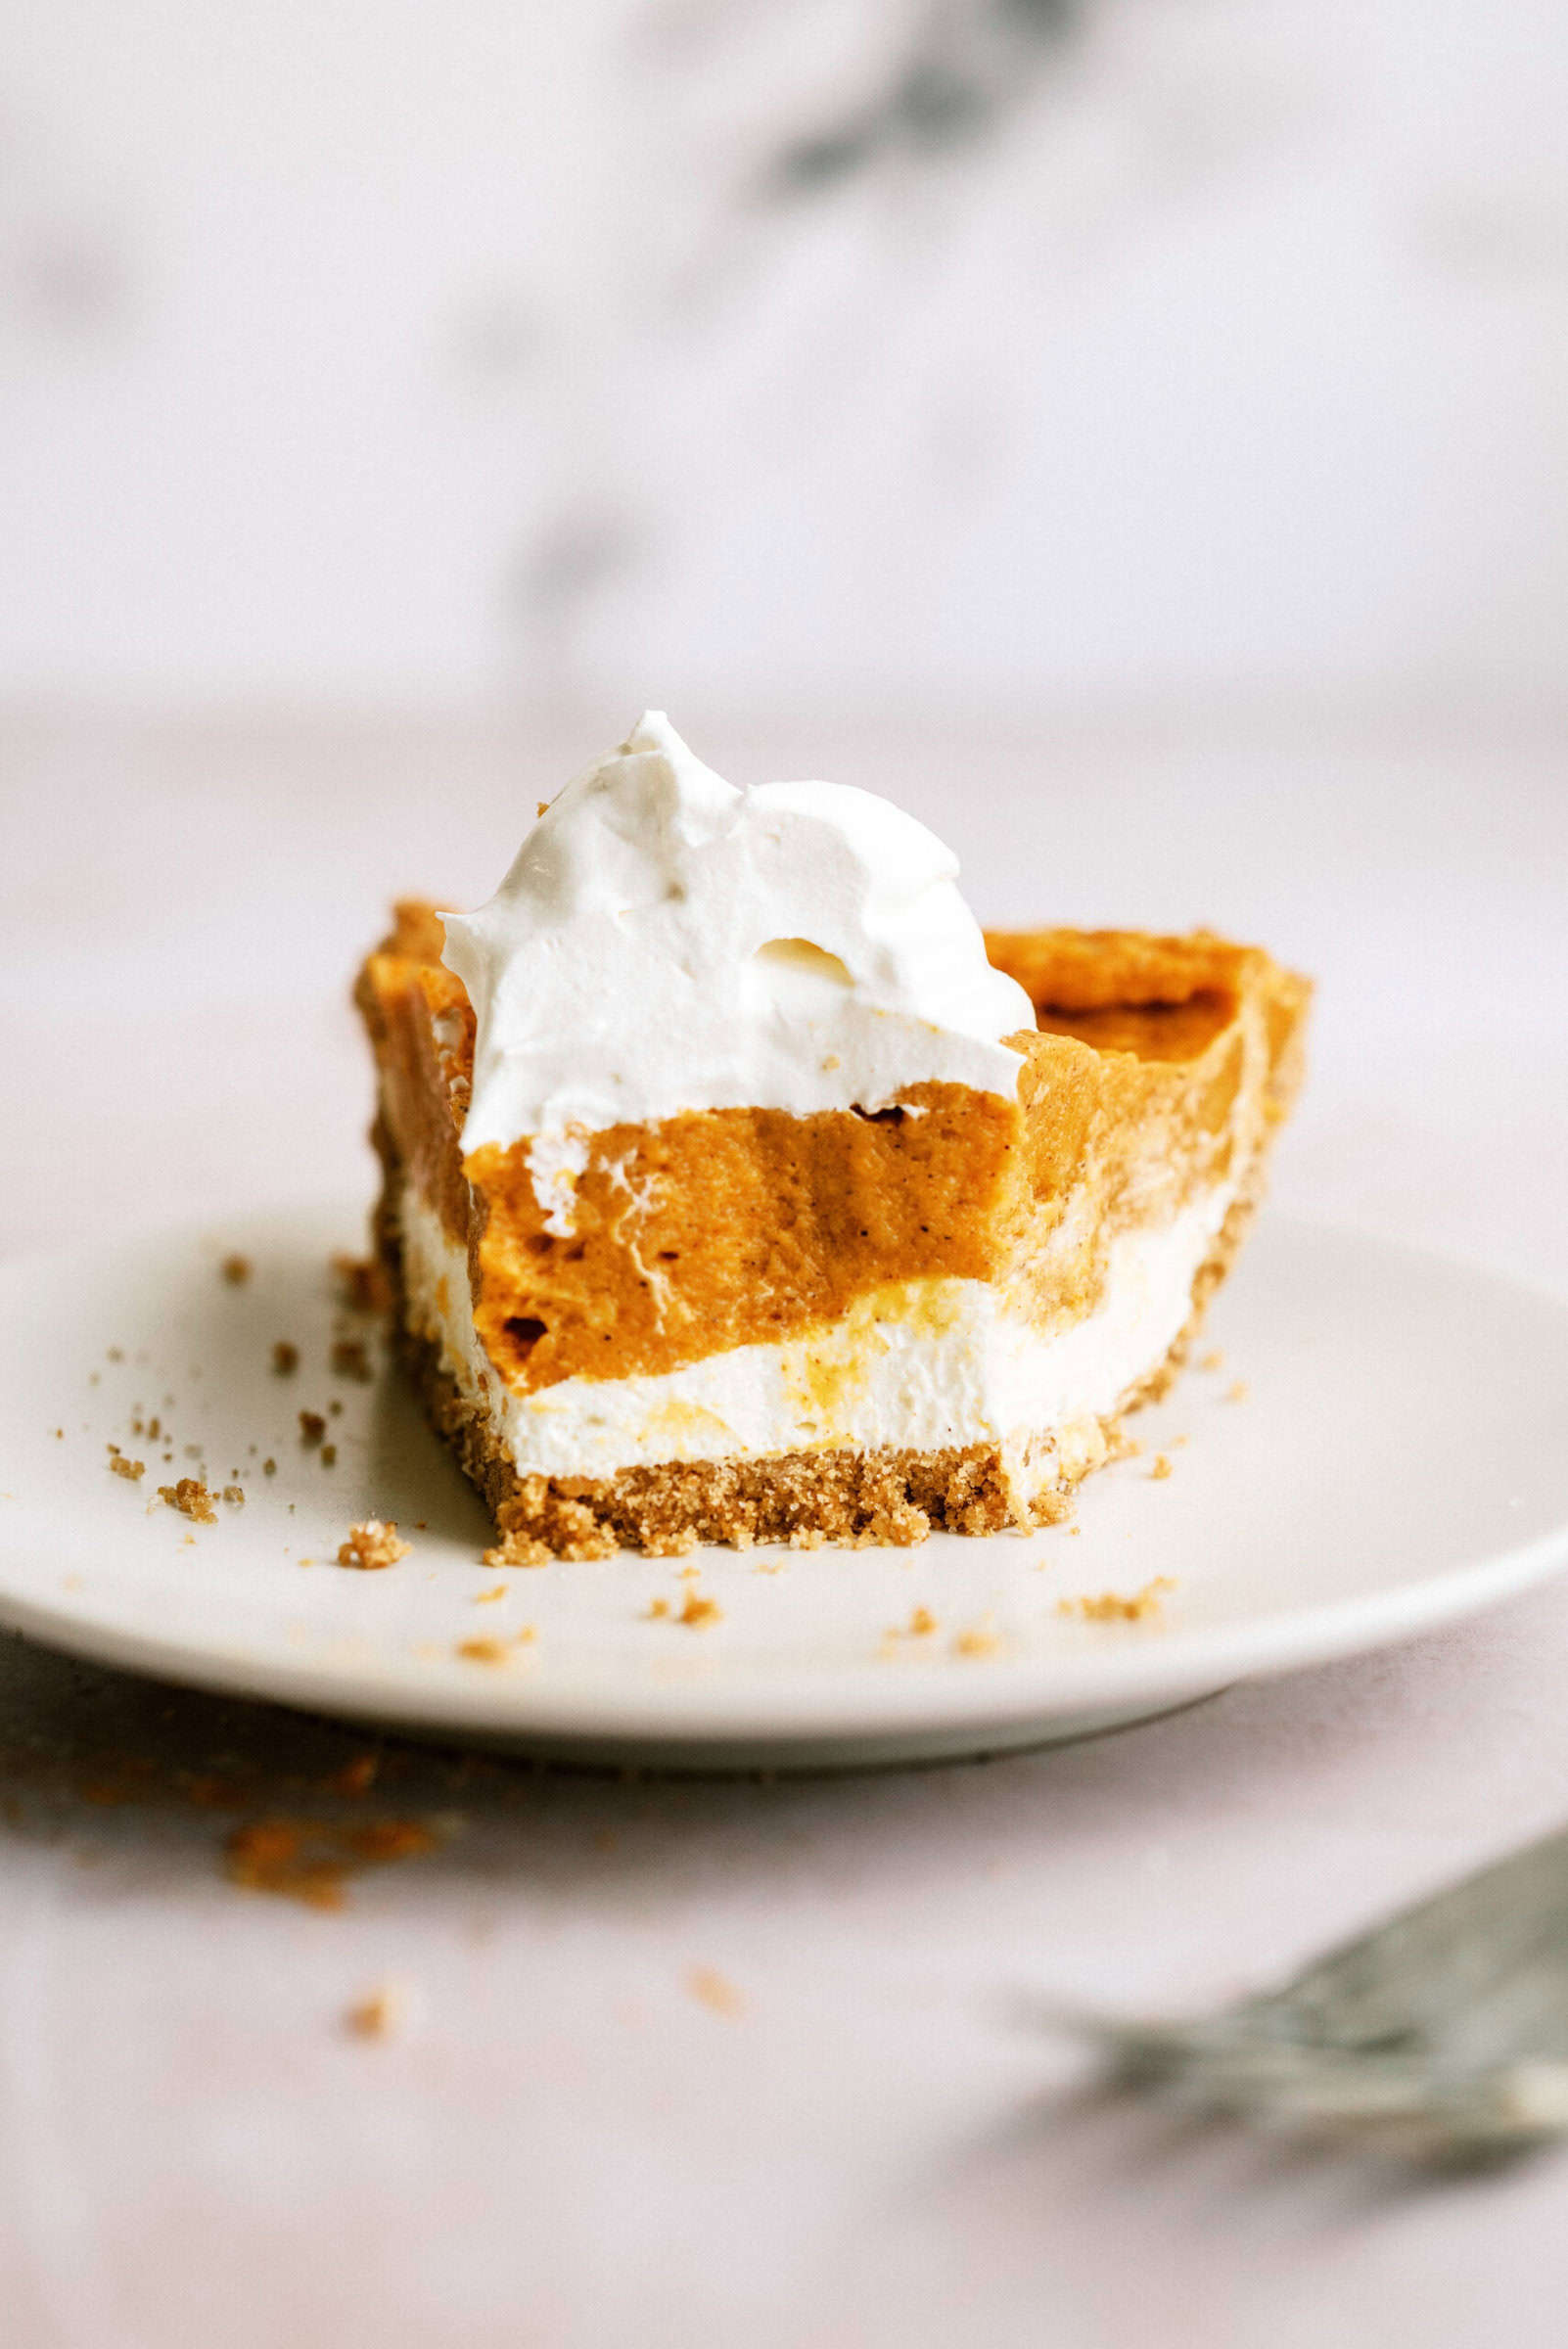 White Pumpkin Pie M&M's Review